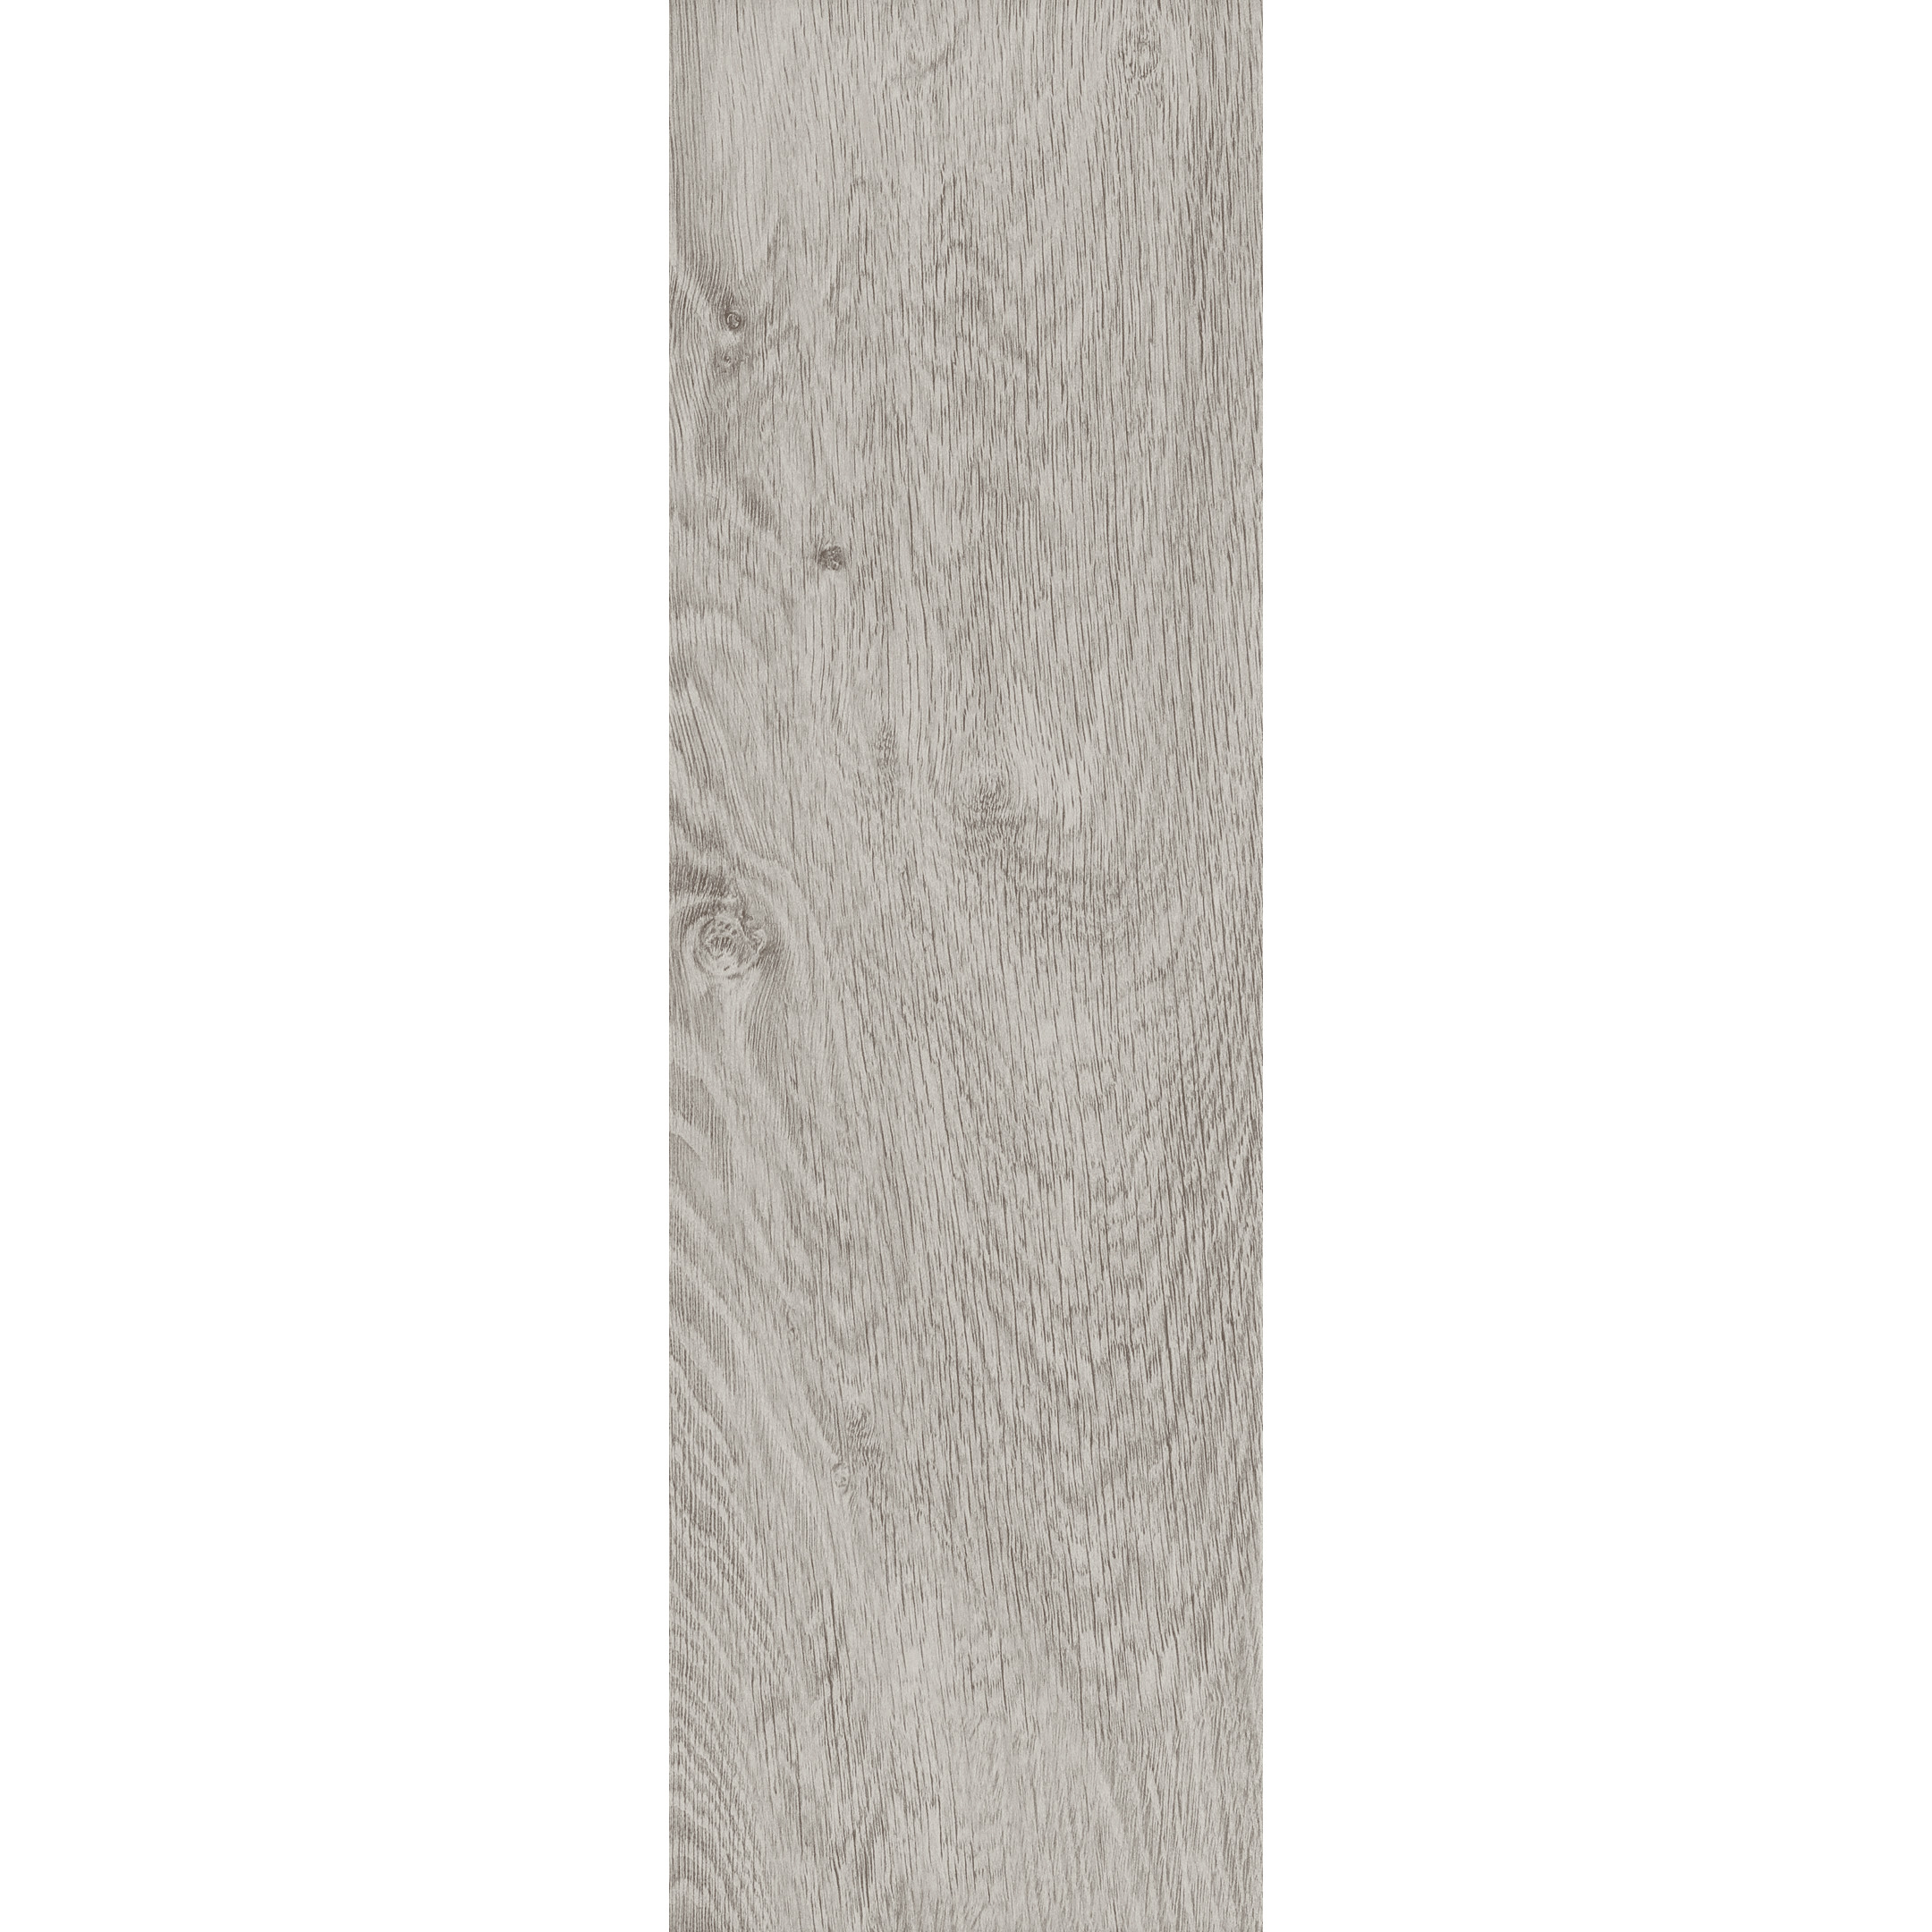 фото Керамогранит cersanit northwood серый матовый 598х185х7,5 мм (11 шт.=1,216 кв.м)